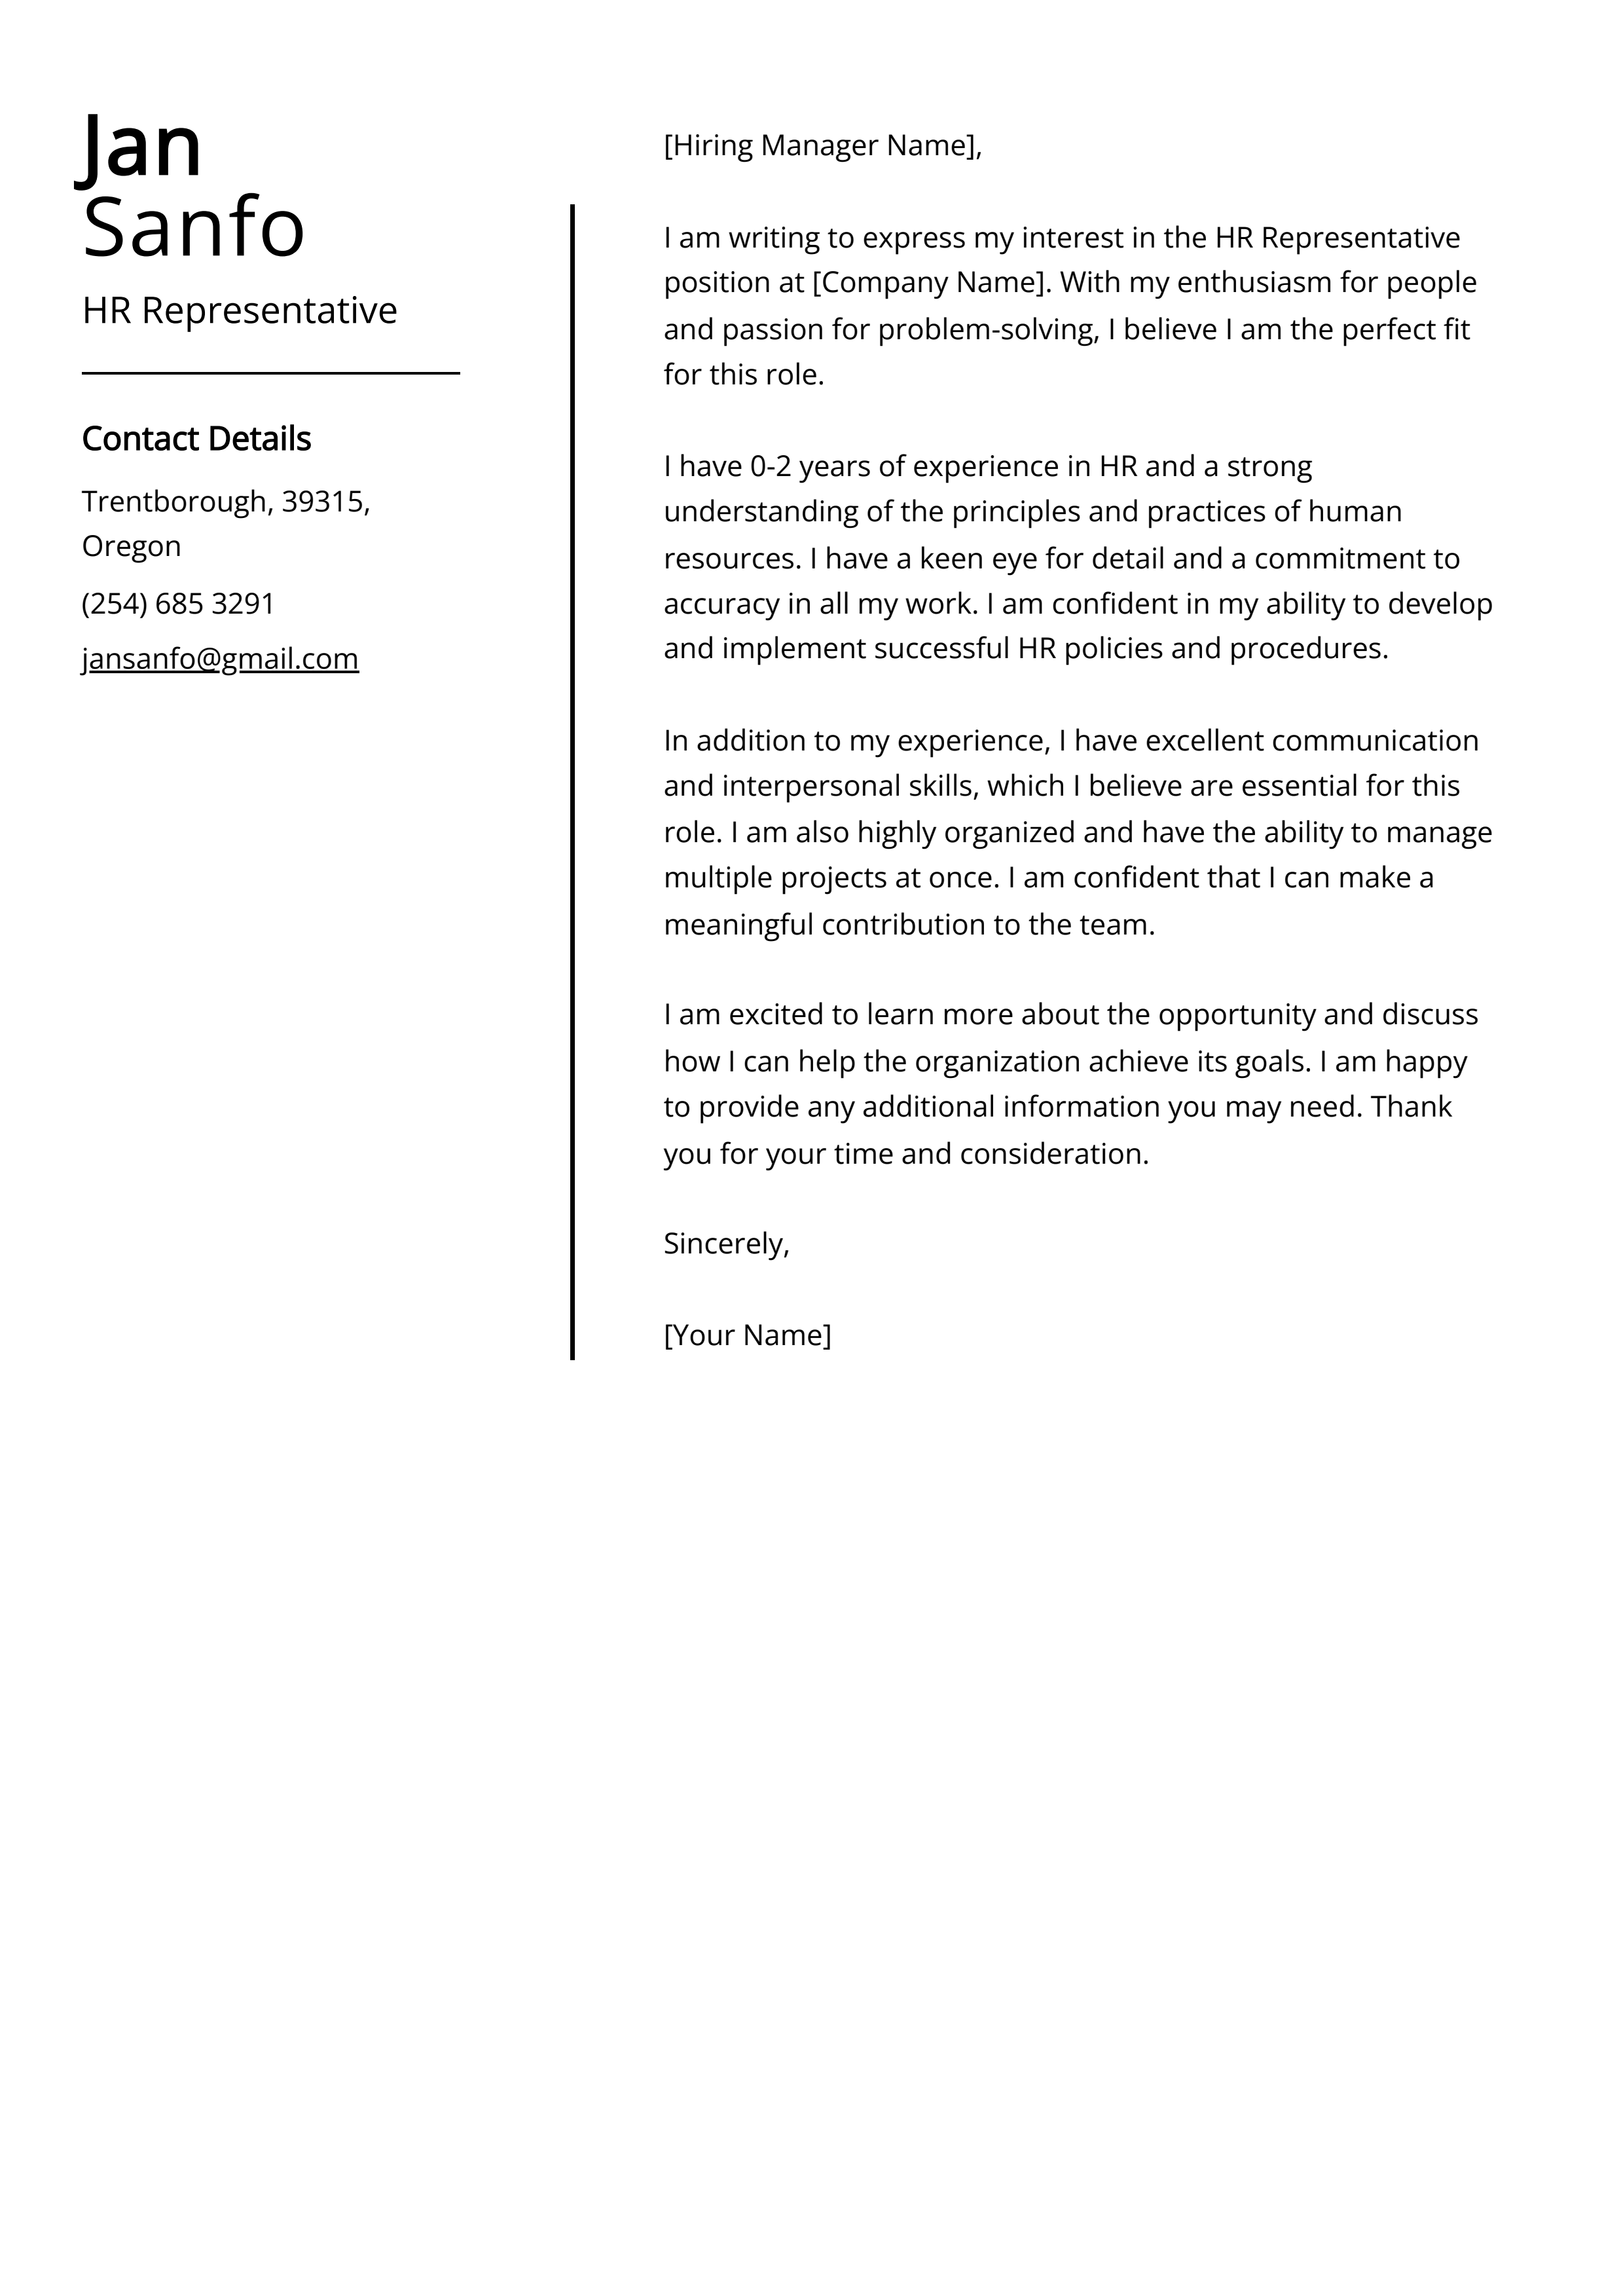 HR Representative Cover Letter Example